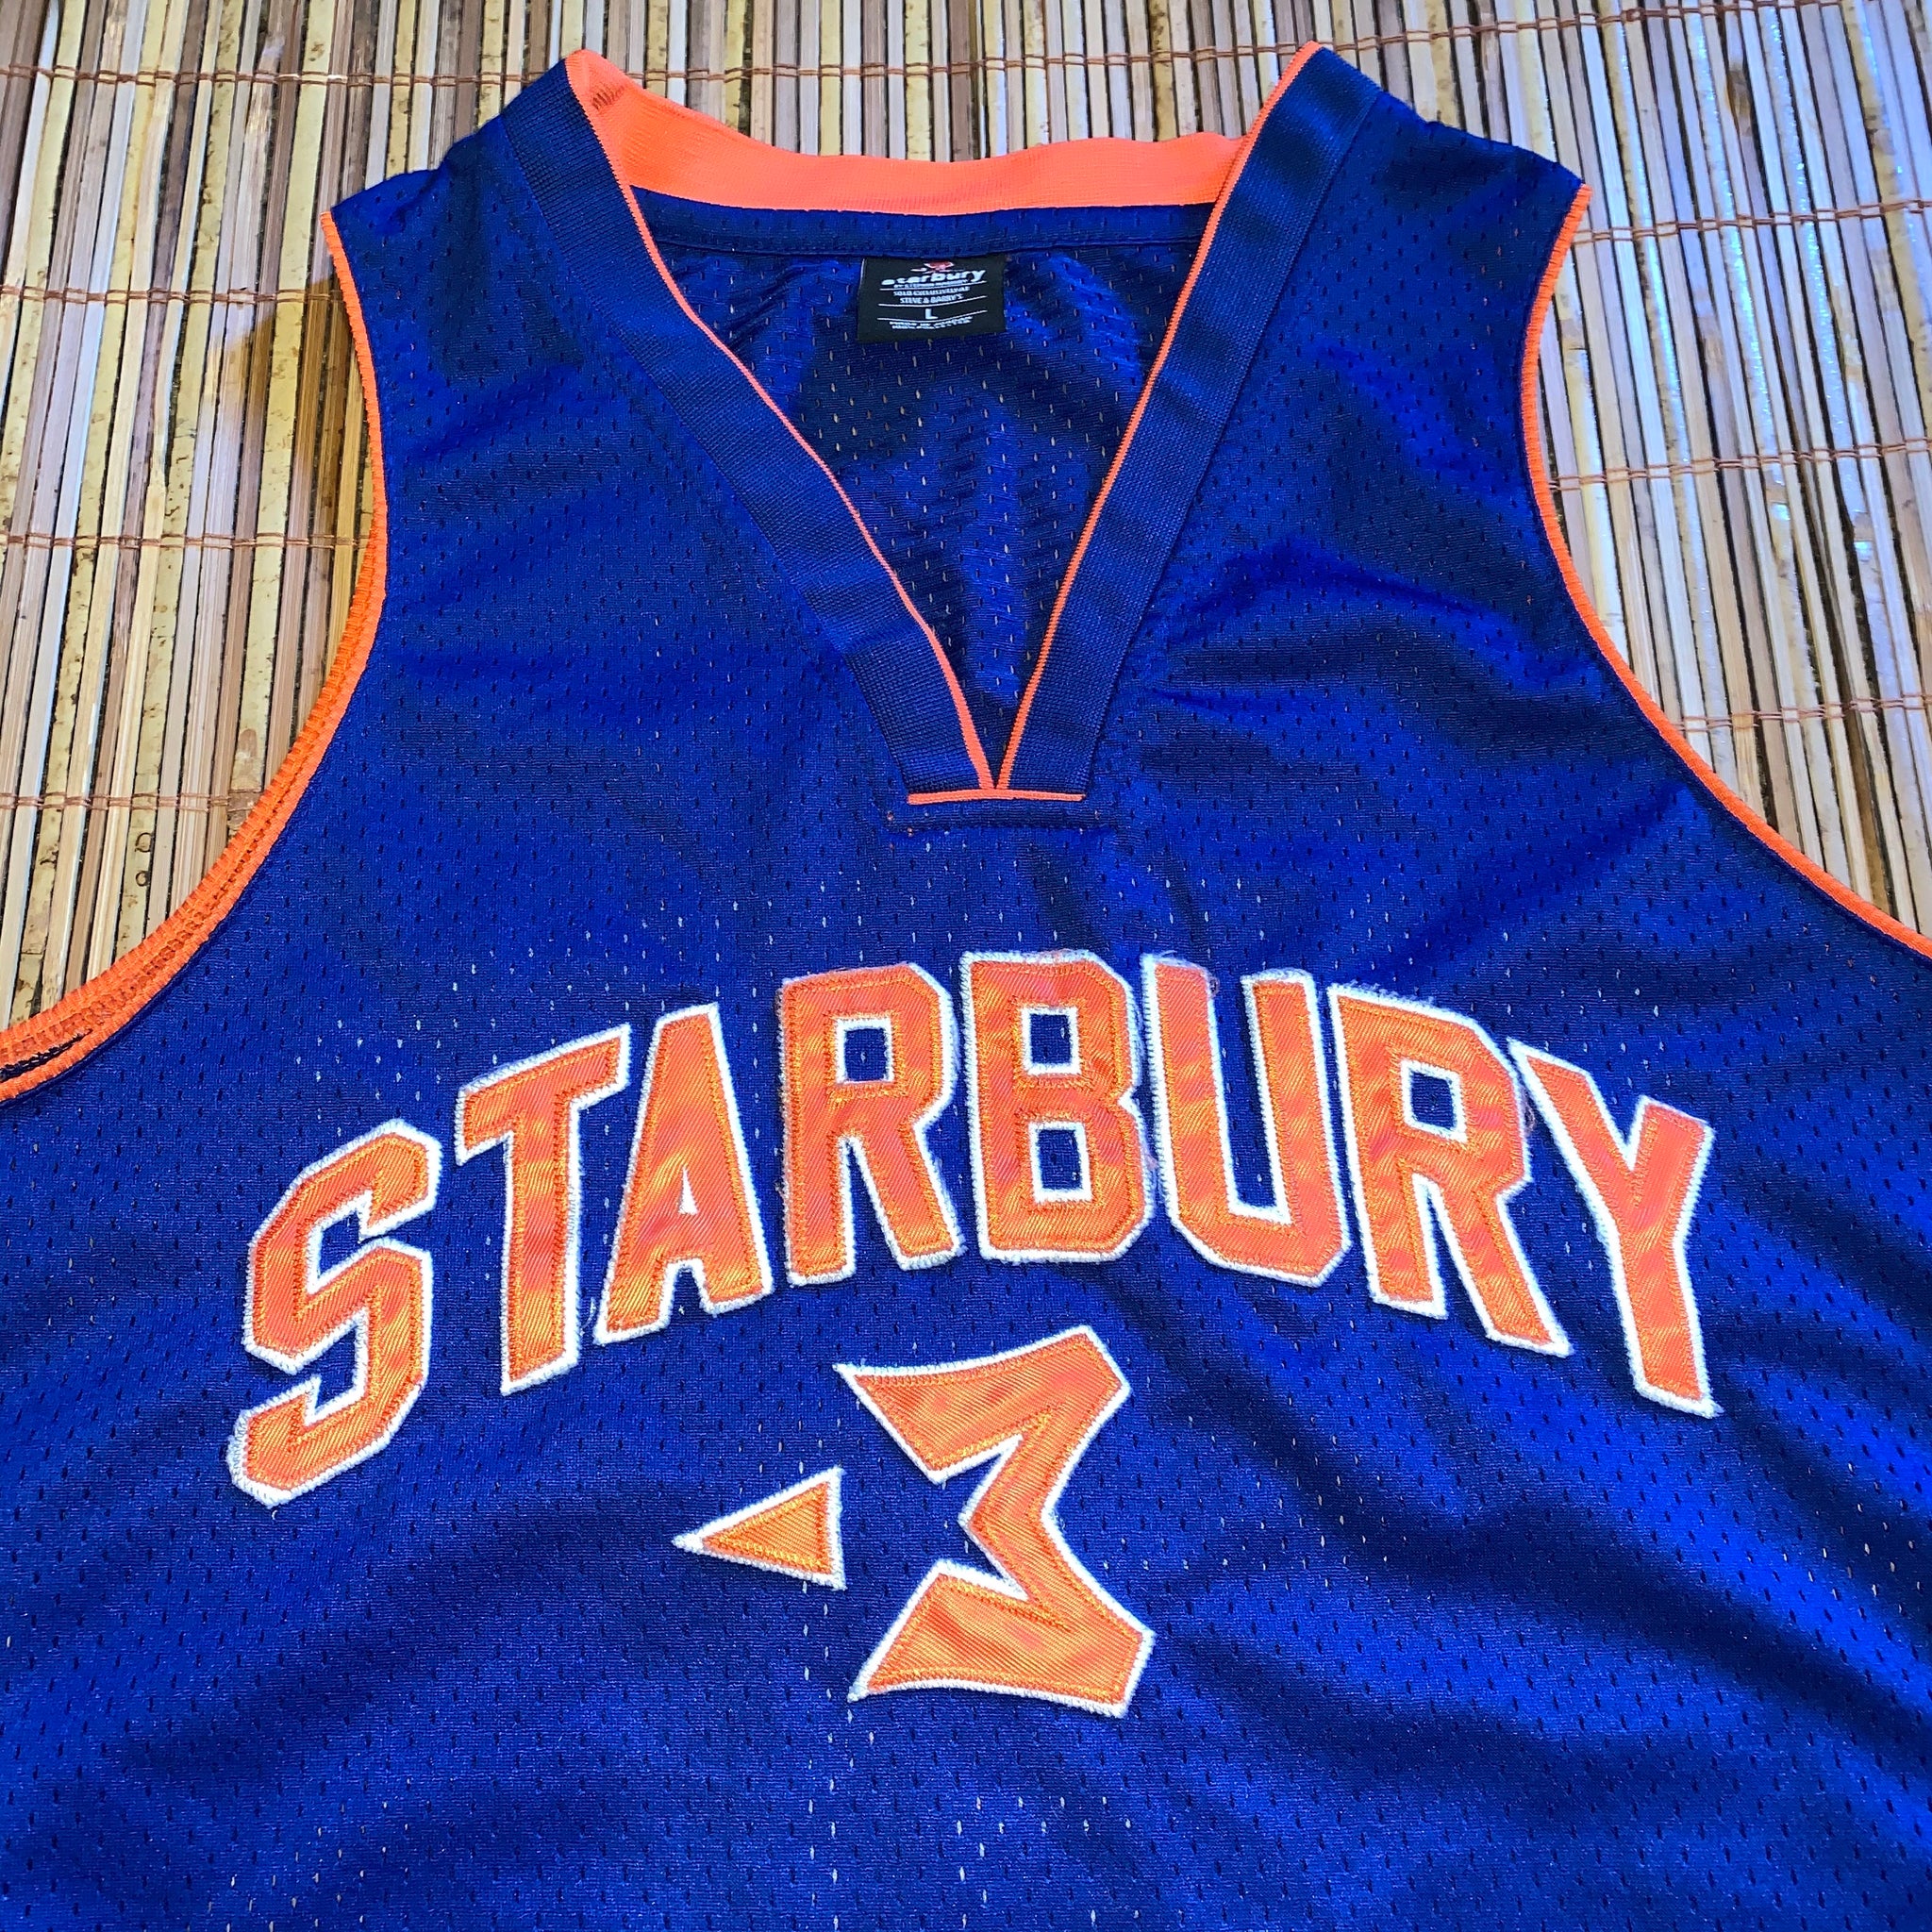 starbury marbury jersey